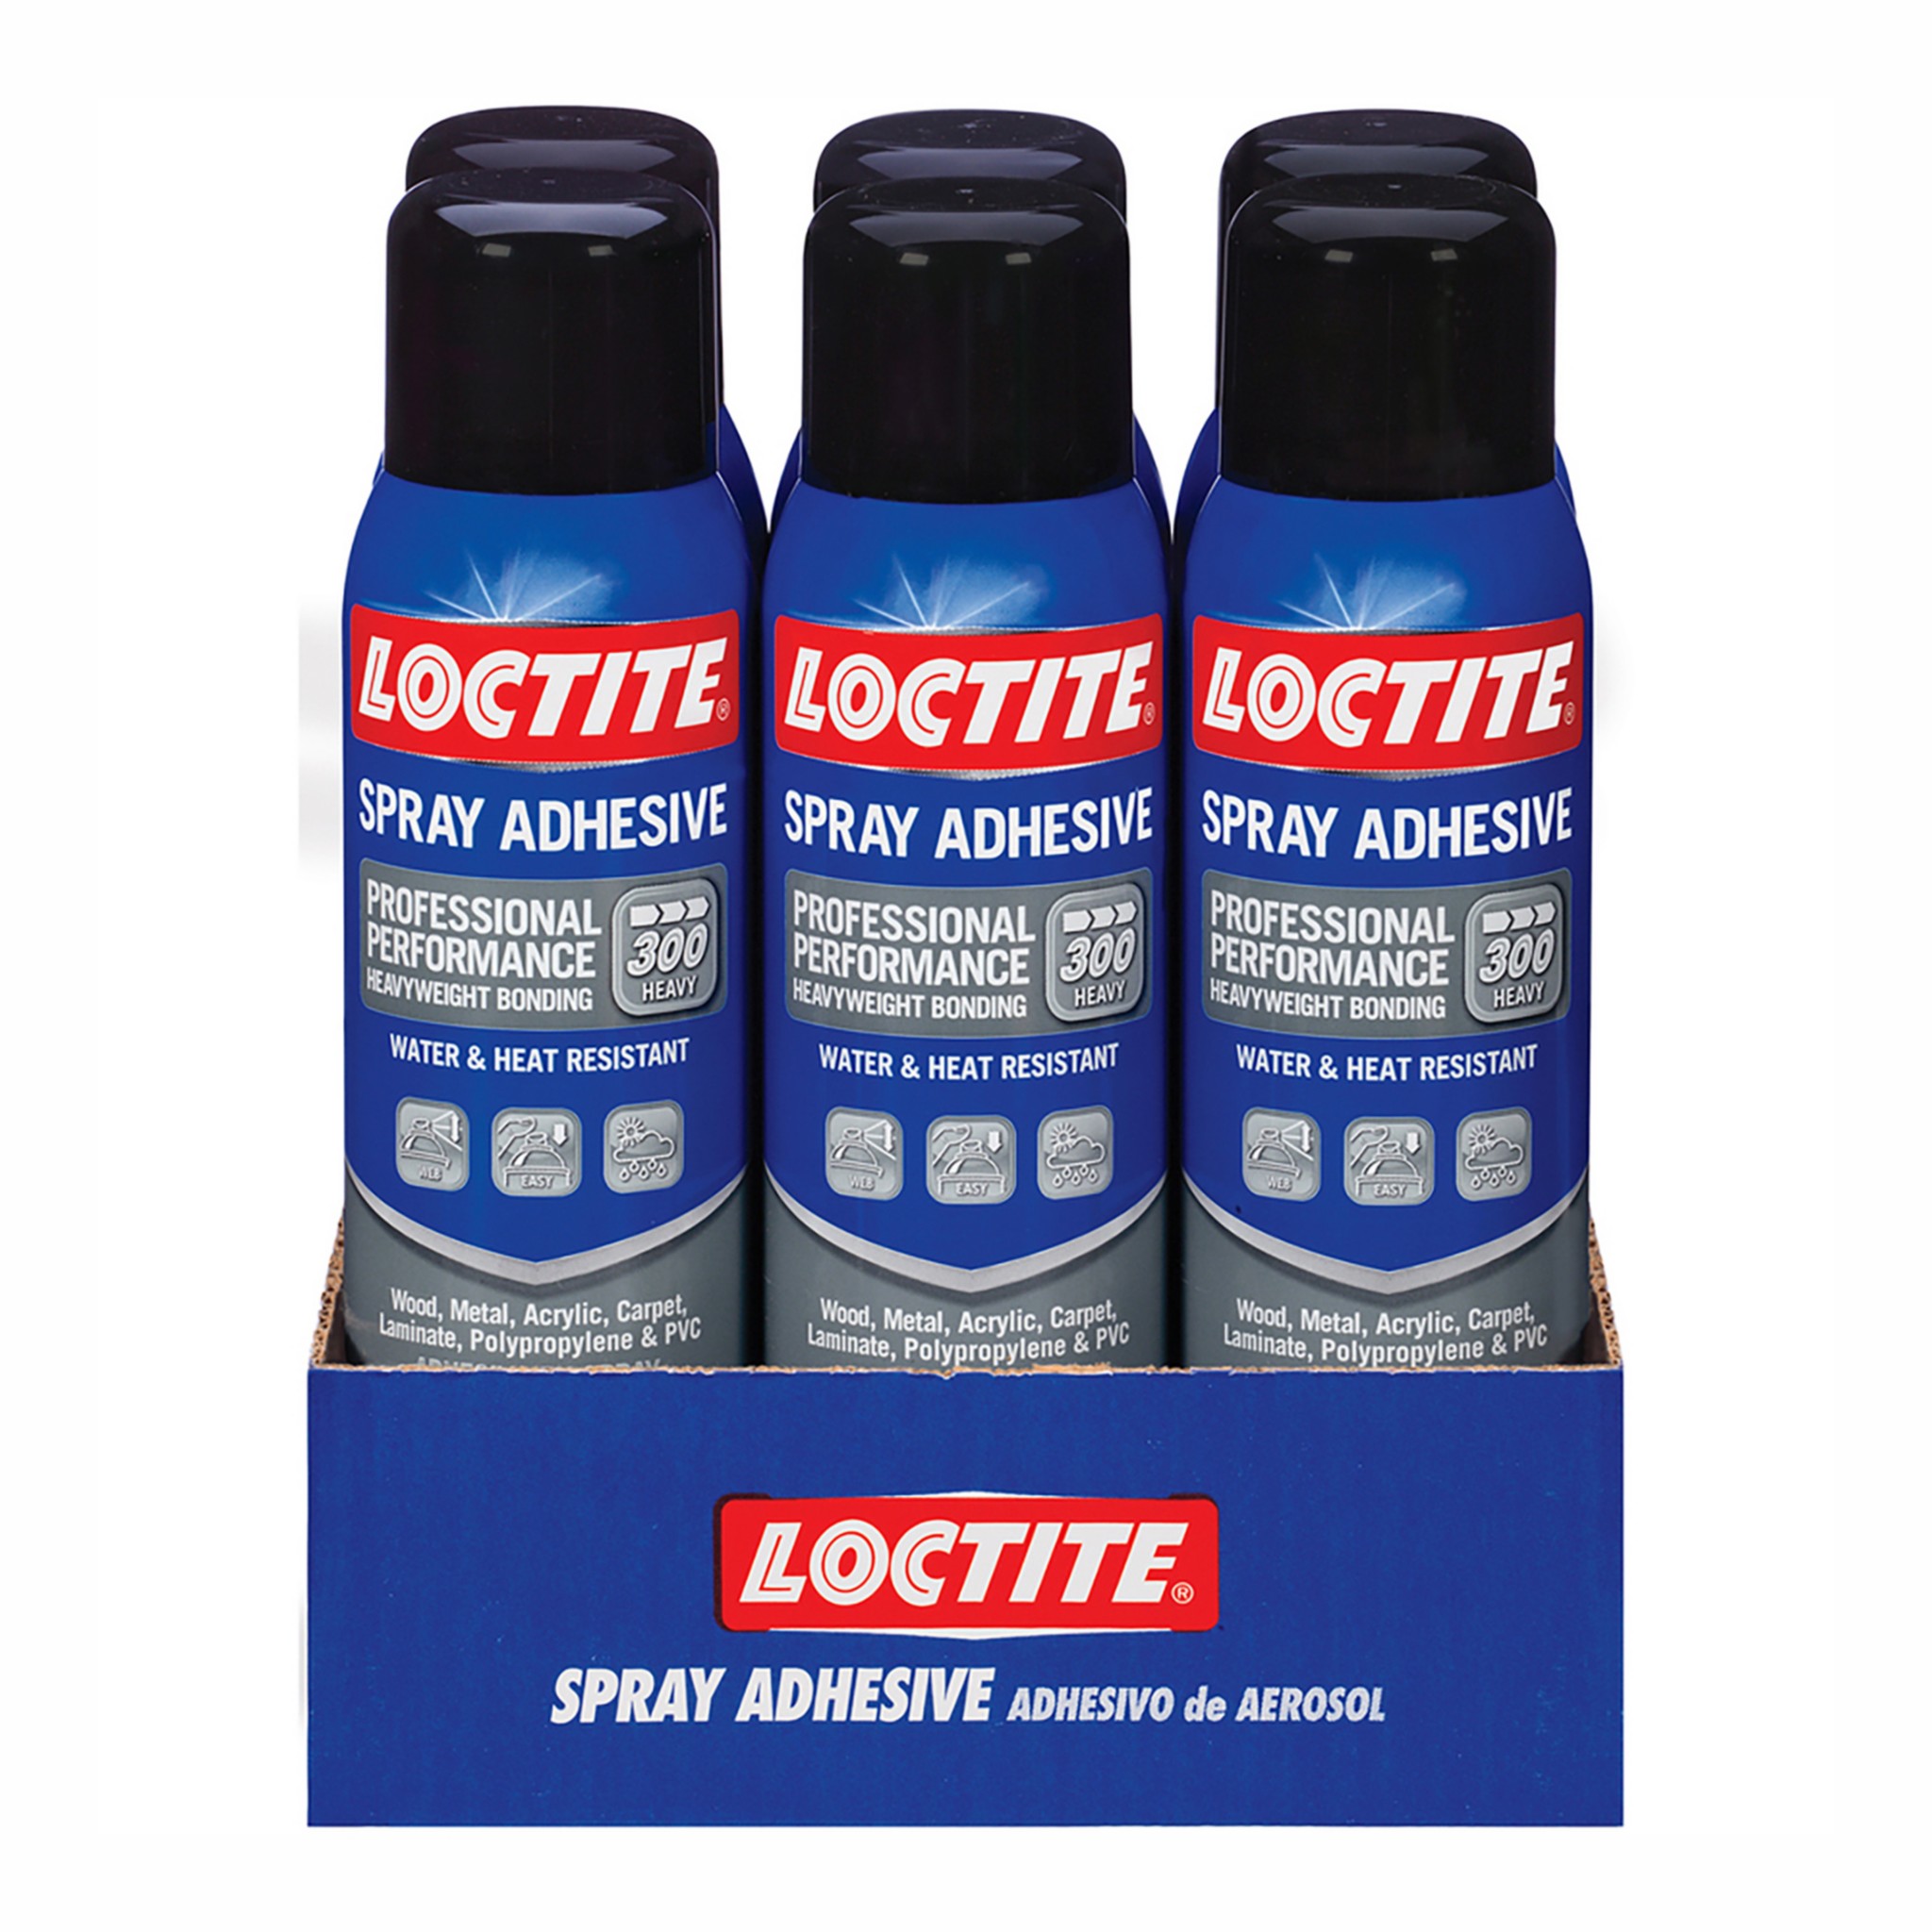 Loctite® Spray Adhesive Professional Performance